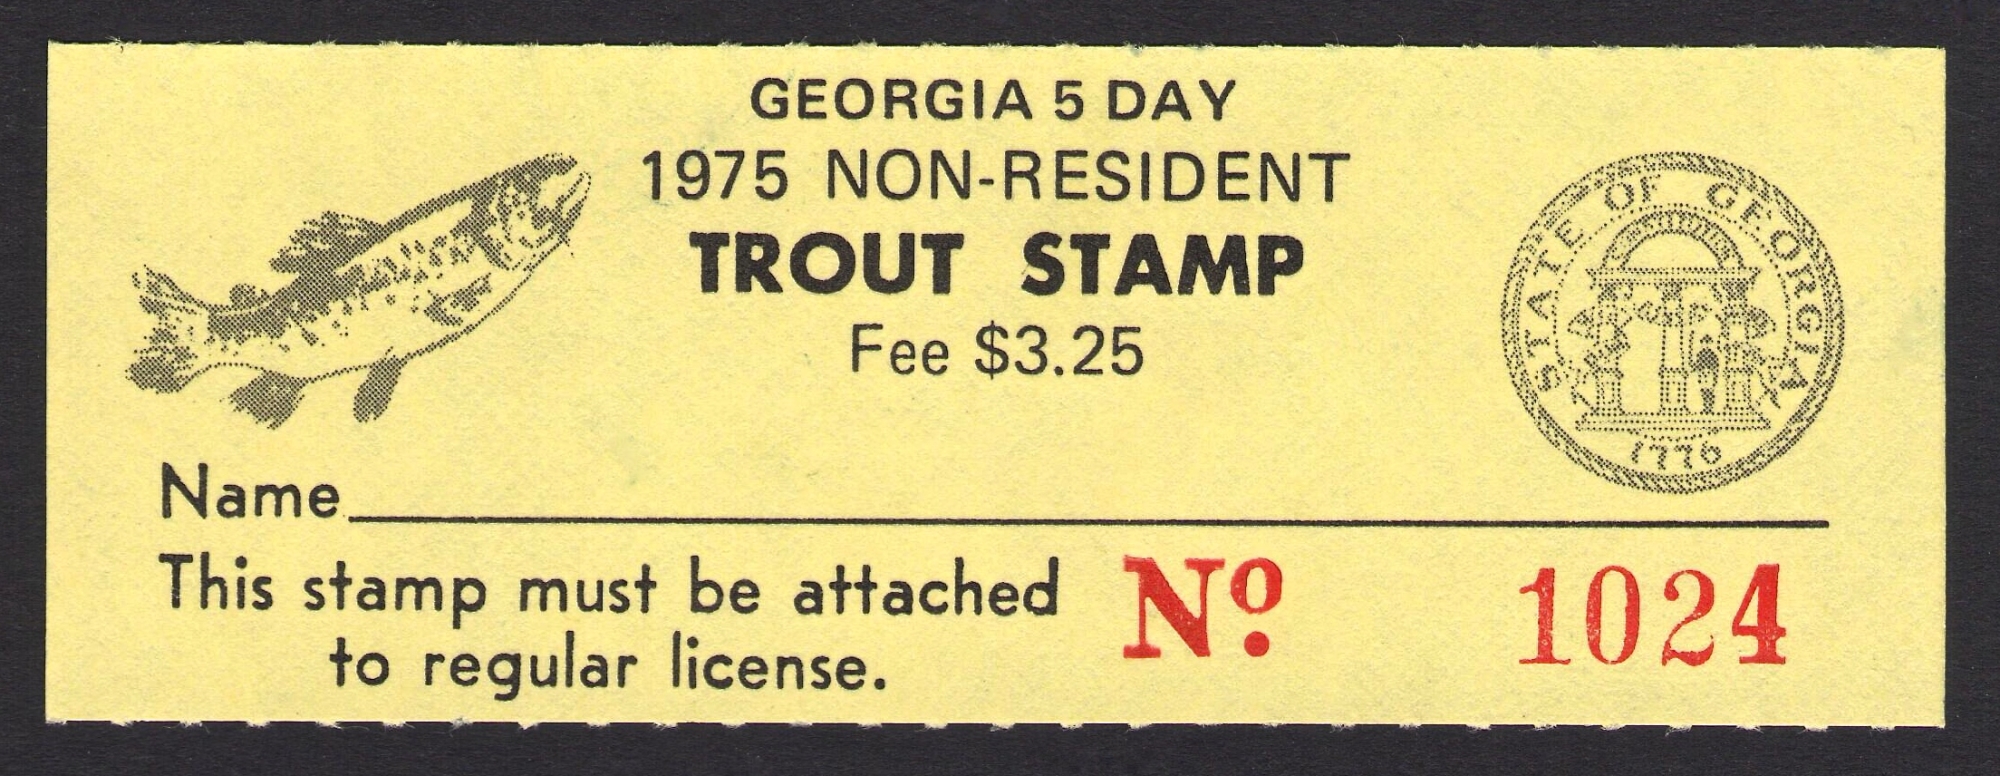 1975 Georgia 5 Day NR Trout